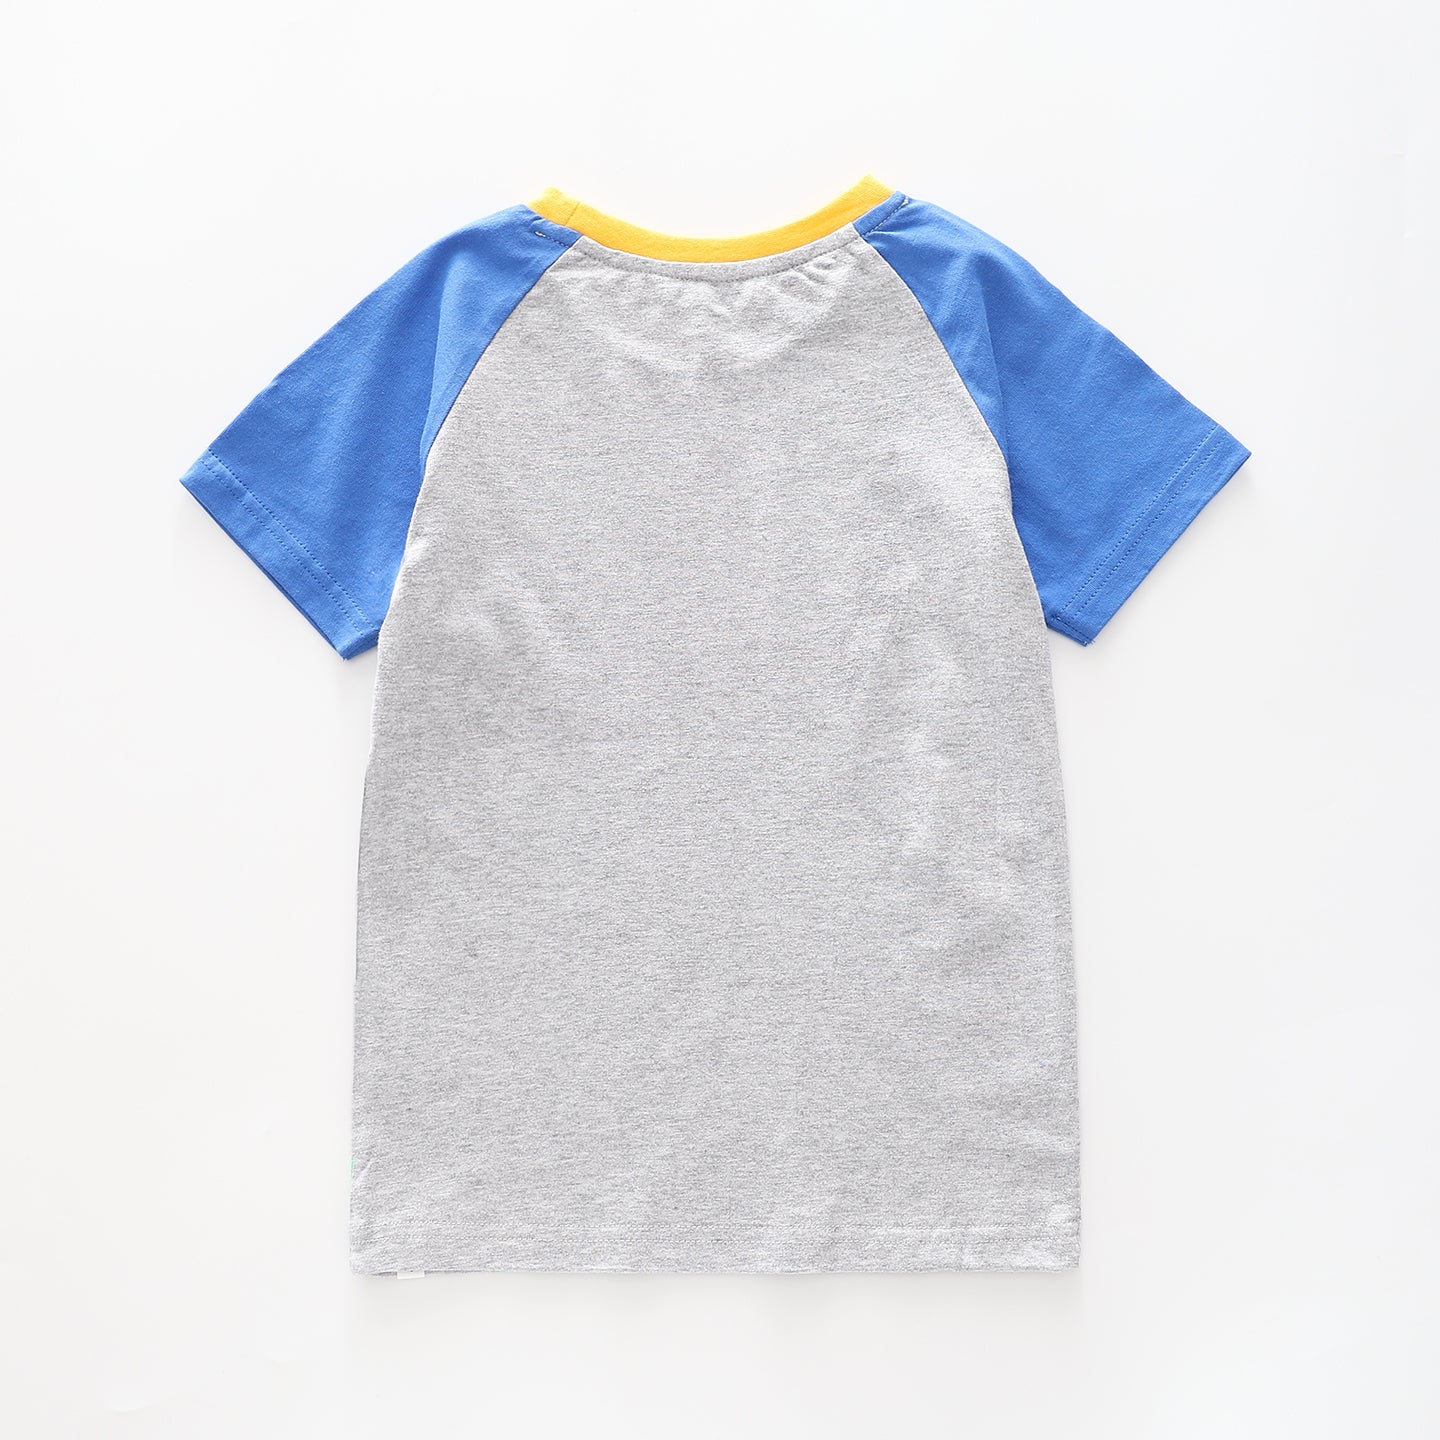 Boy's Blue and Grey T-shirt With Rhinoceros Print